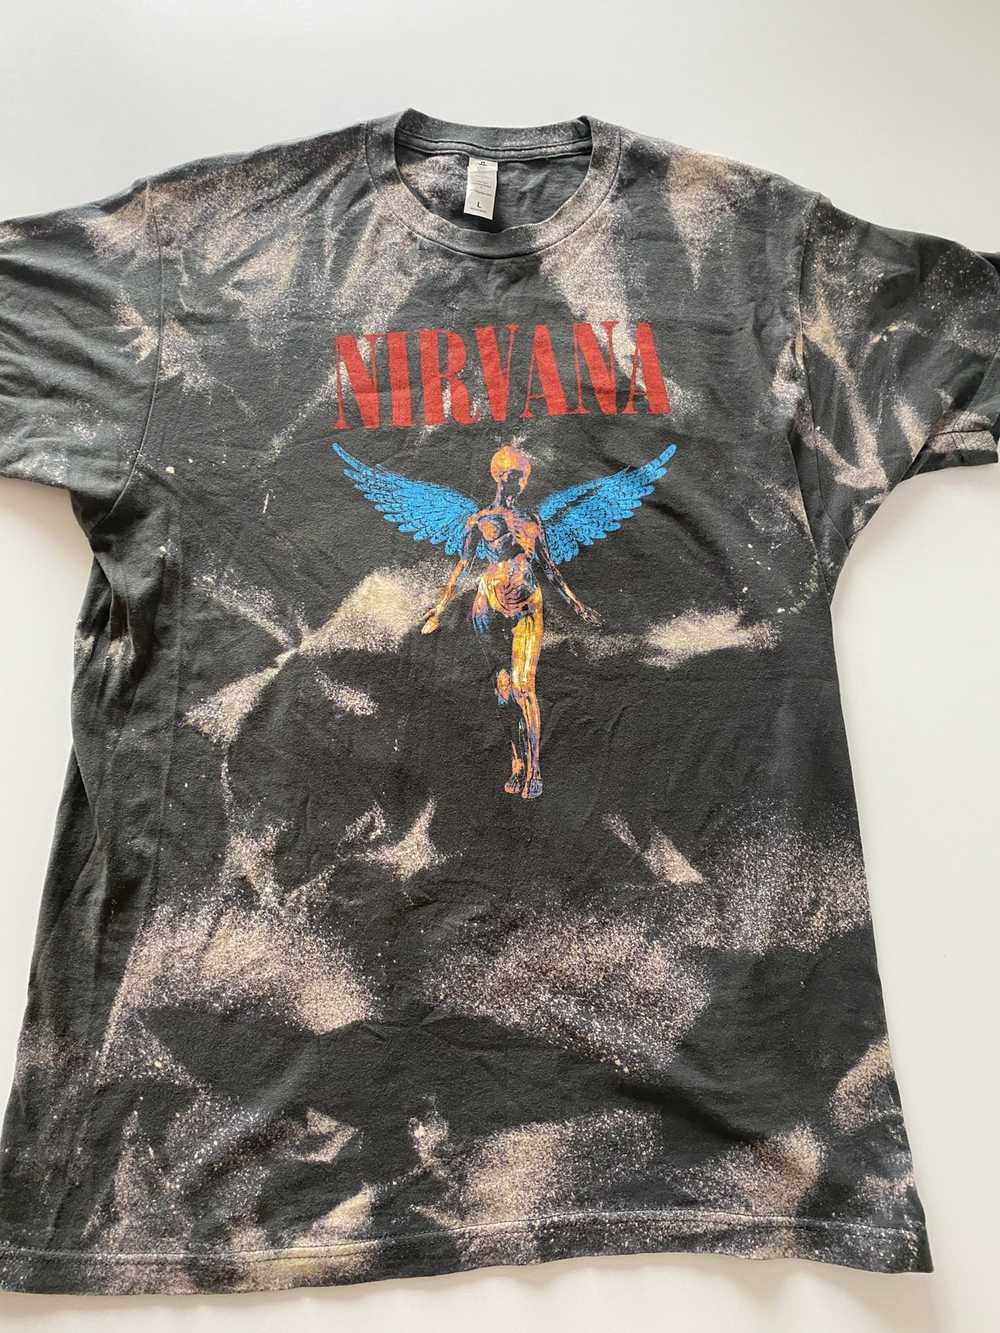 Vintage Vintage Acid dye Nirvana shirt - image 1